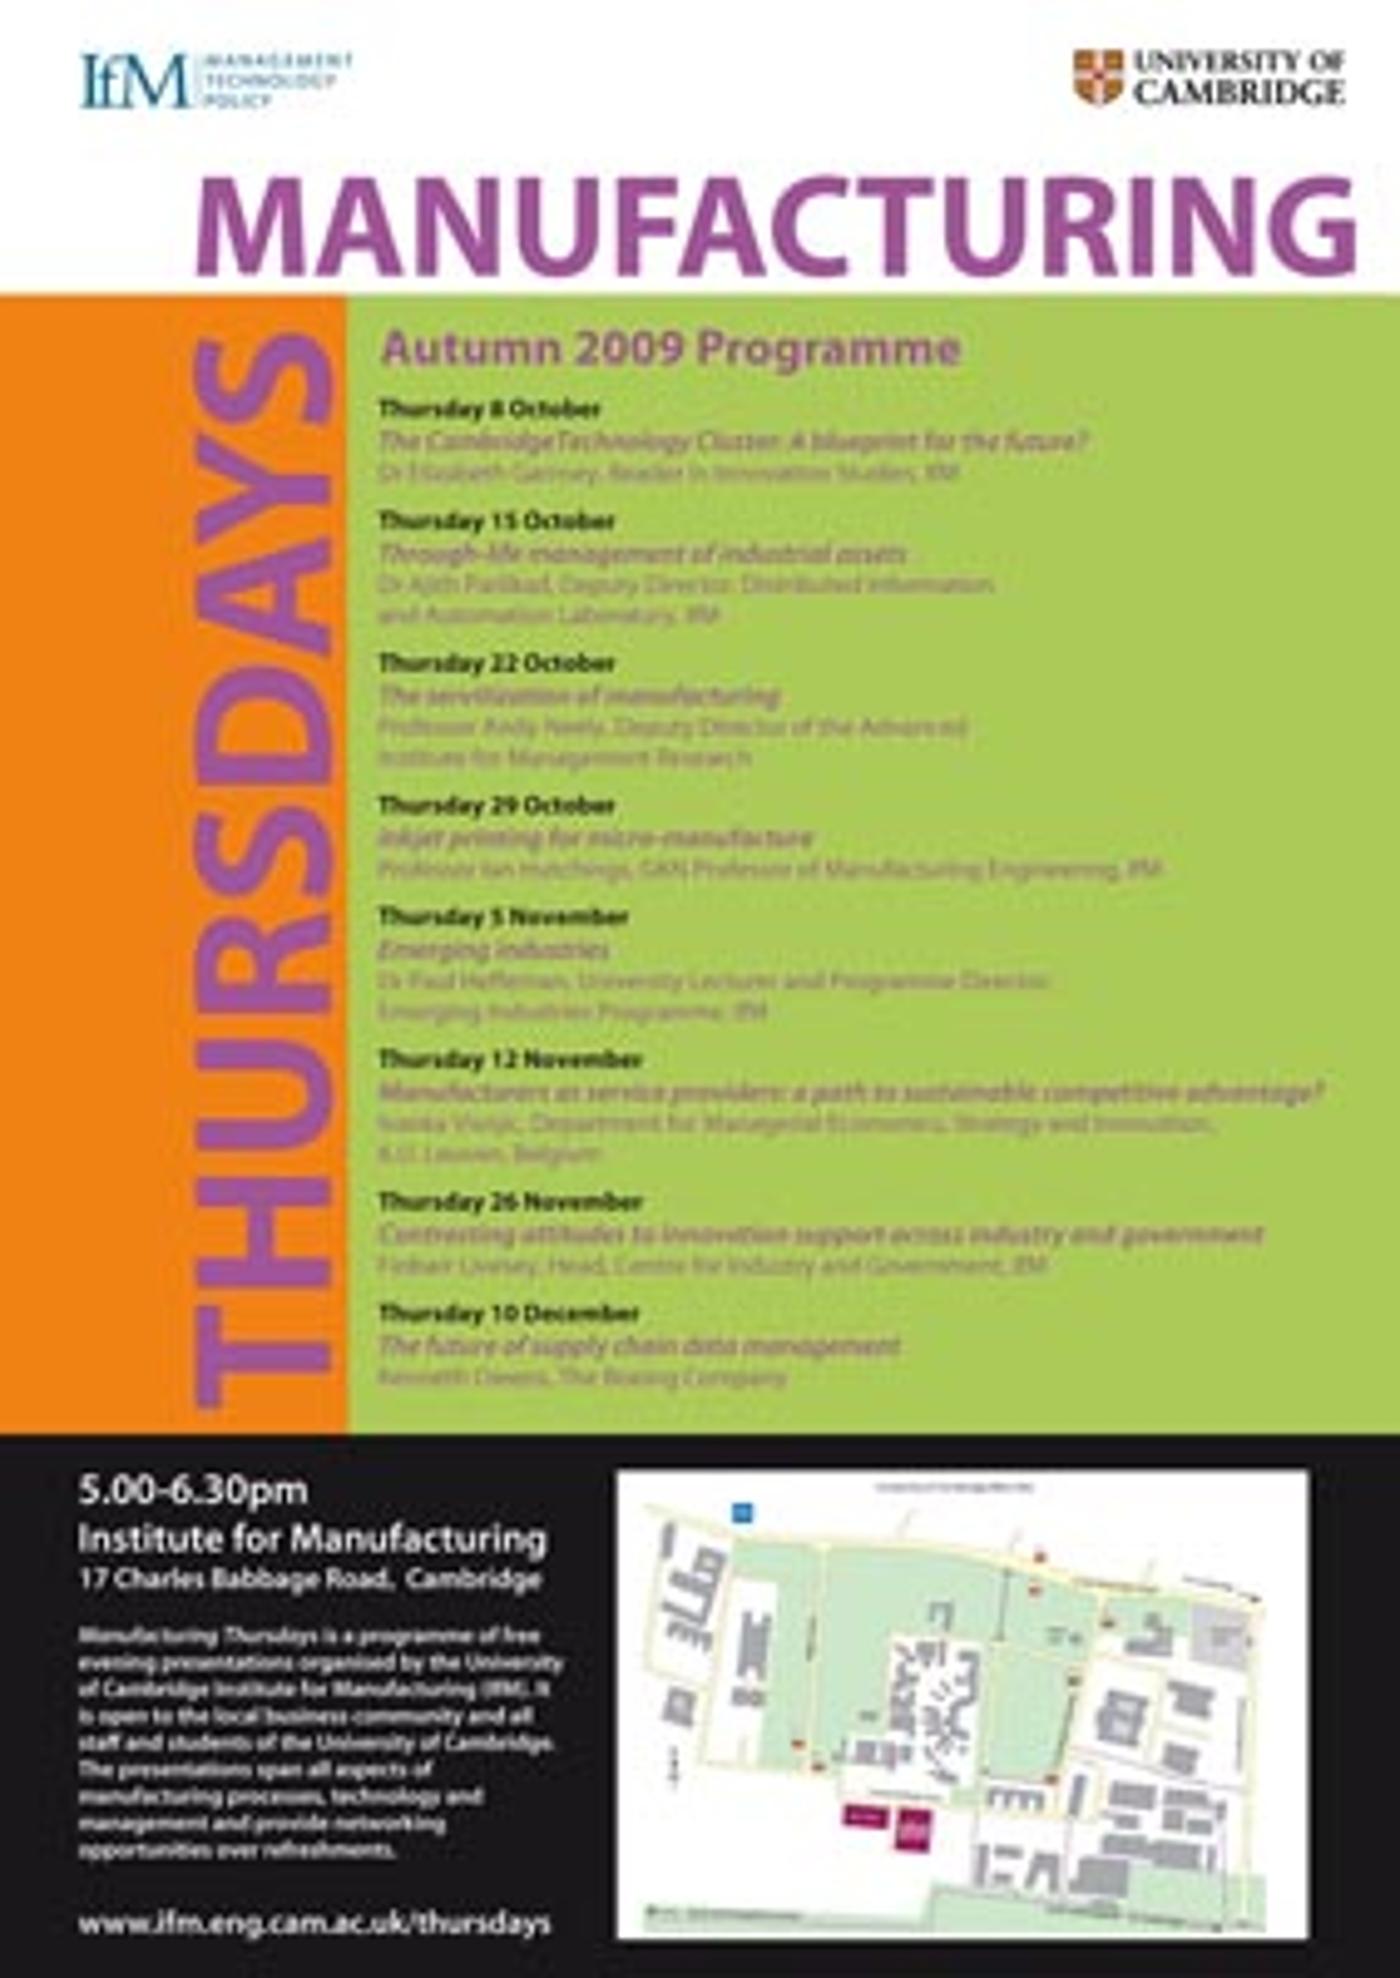 Manufacturing Thursdays Seminars, Institute for Manufacturing